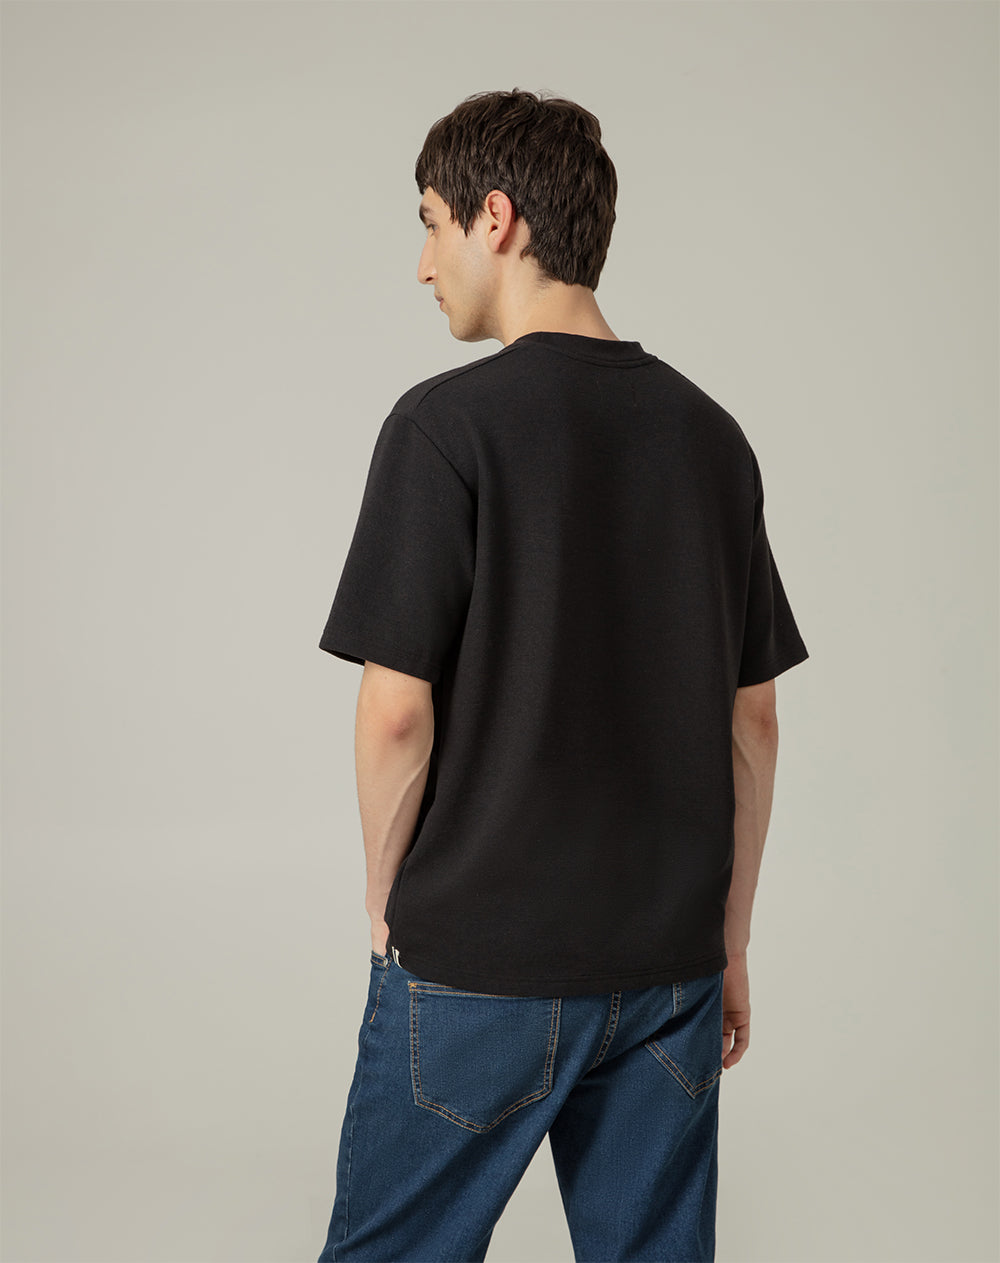 Camiseta loose fit manga corta negra